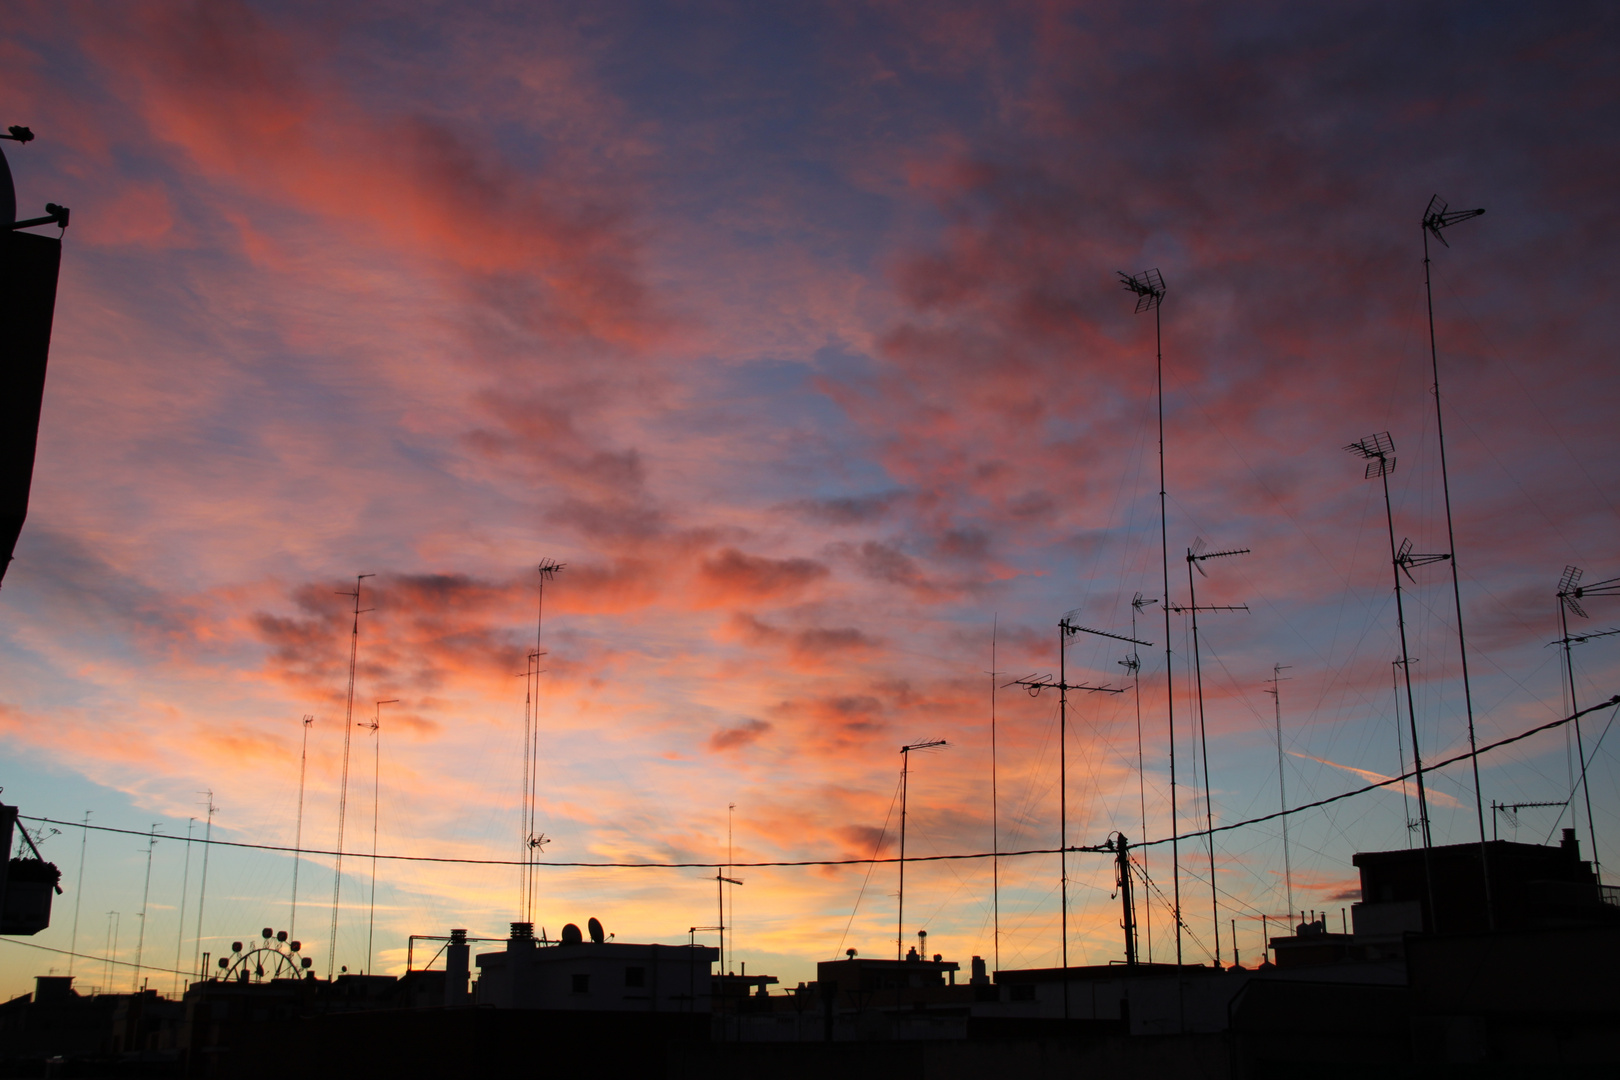 Amanecer redondo. Puerto de Valencia, 6 de Diciembre 2012 8:20 AM